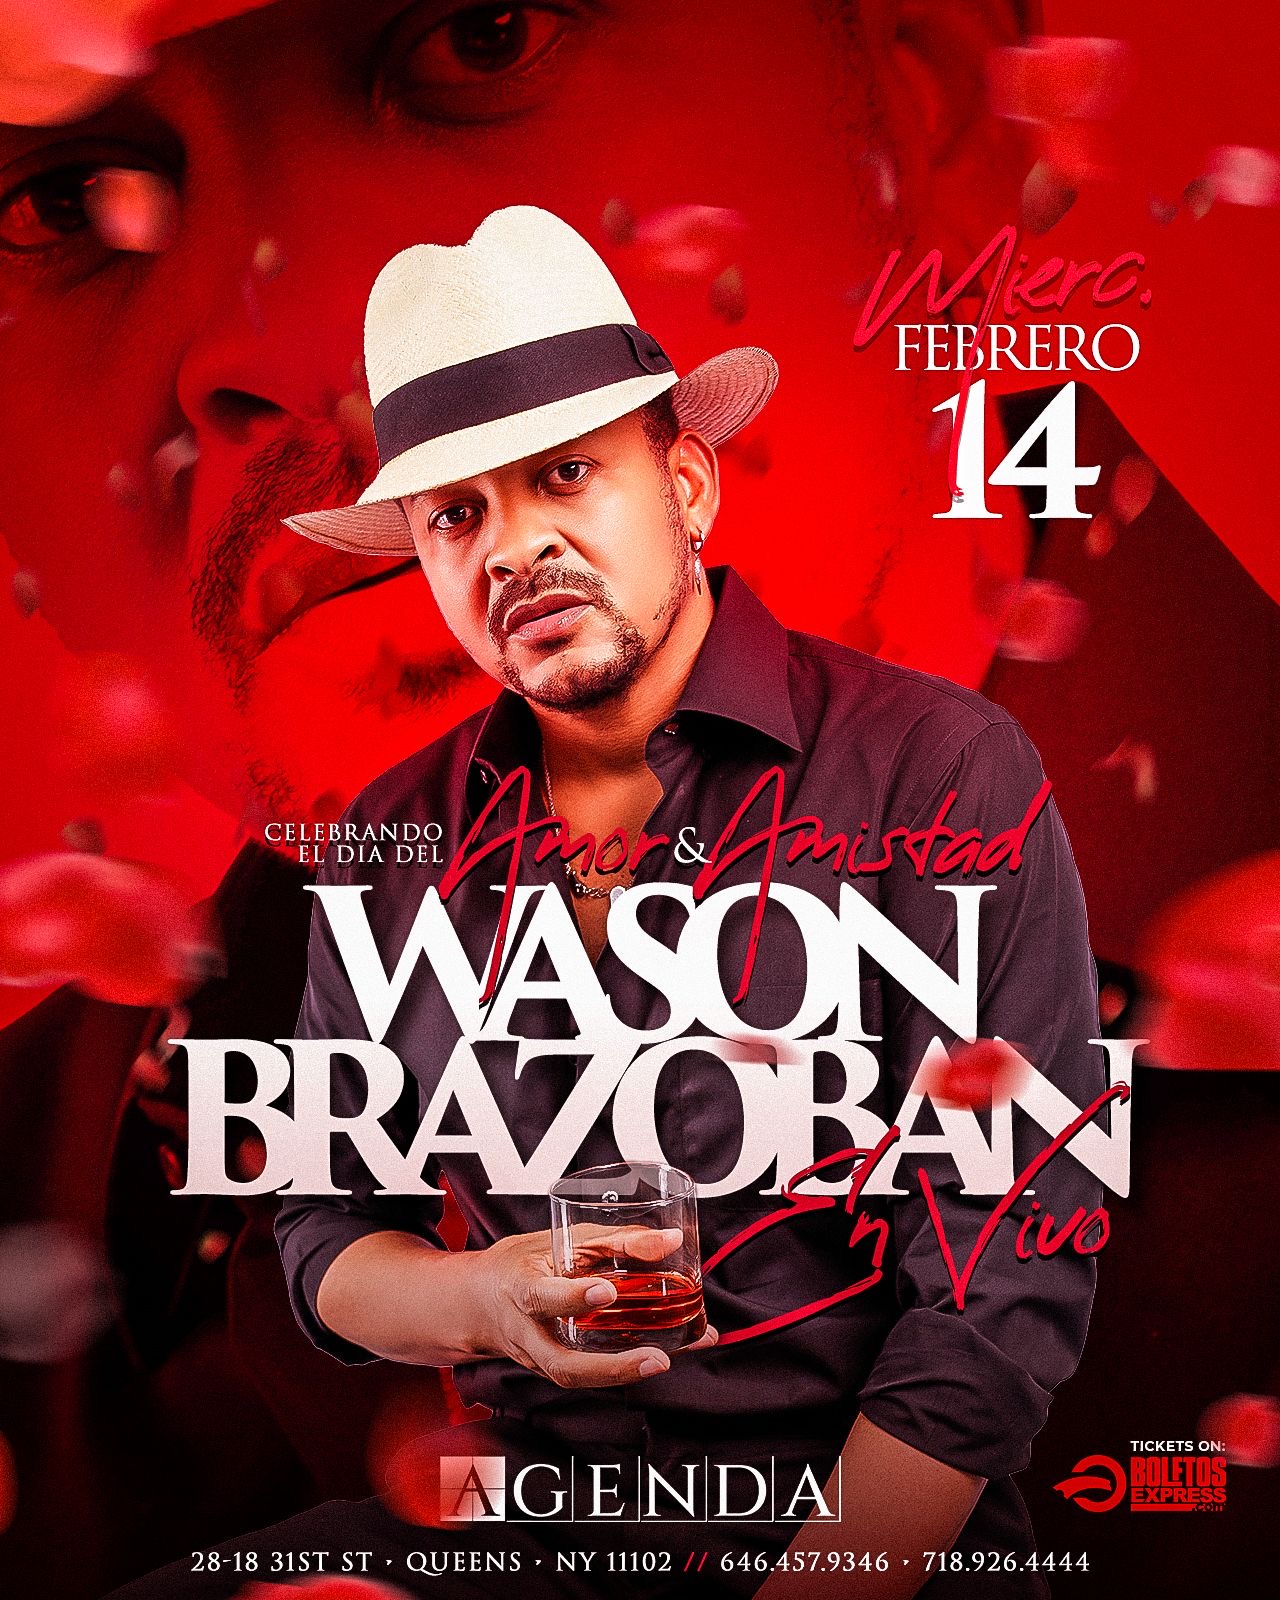 Wason Brazoban “Dia de San Valentín”